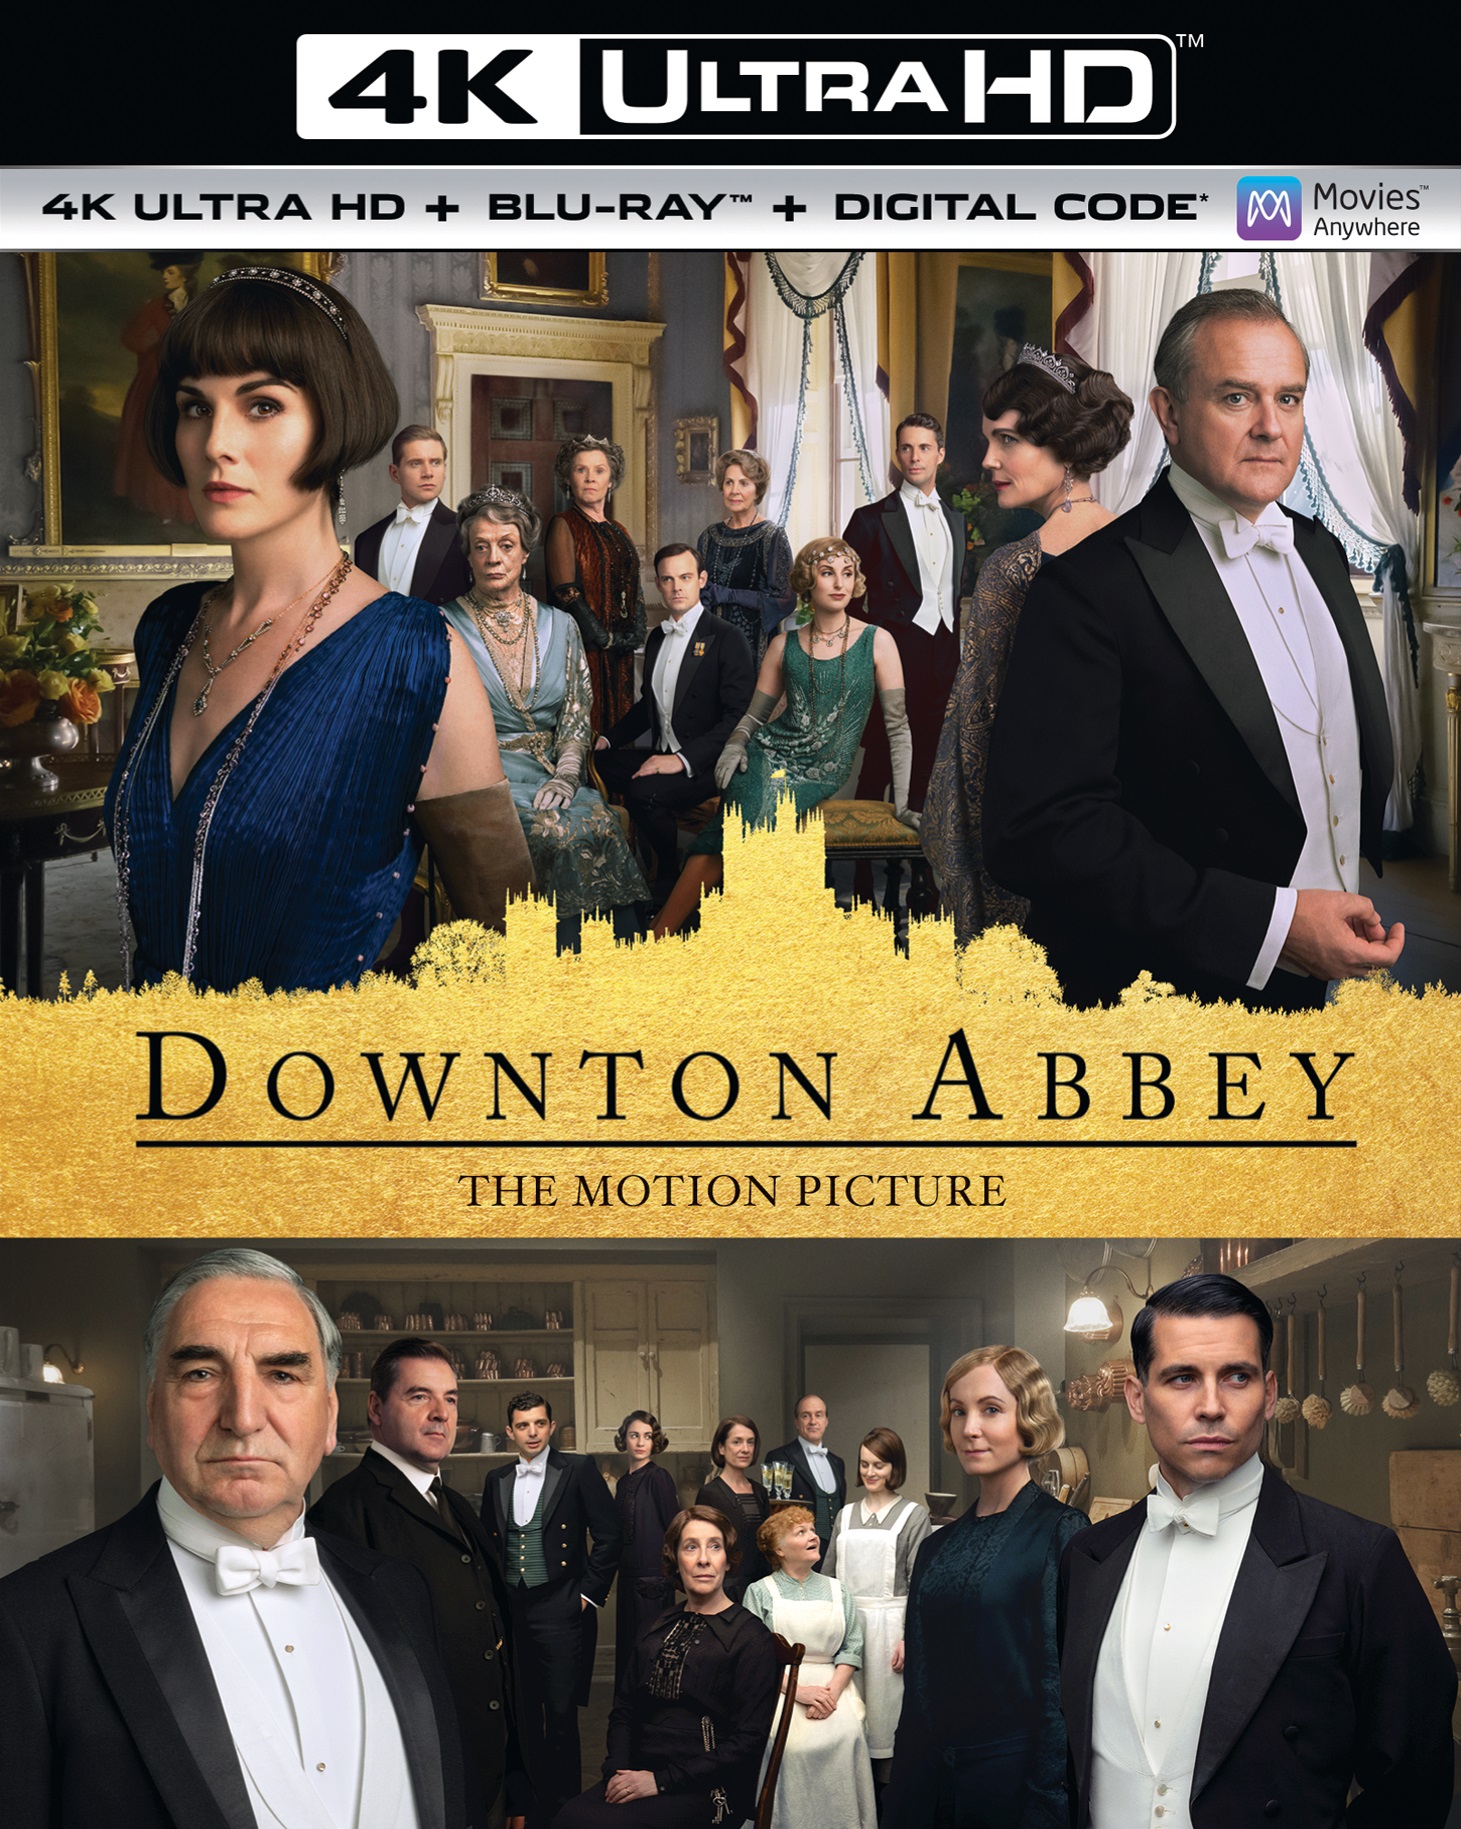 Downton Abbey: The Movie (4K Ultra HD + Blu-ray) - UHD [ 2019 ]  - Drama Movies On 4K Ultra HD Blu-ray - Movies On GRUV